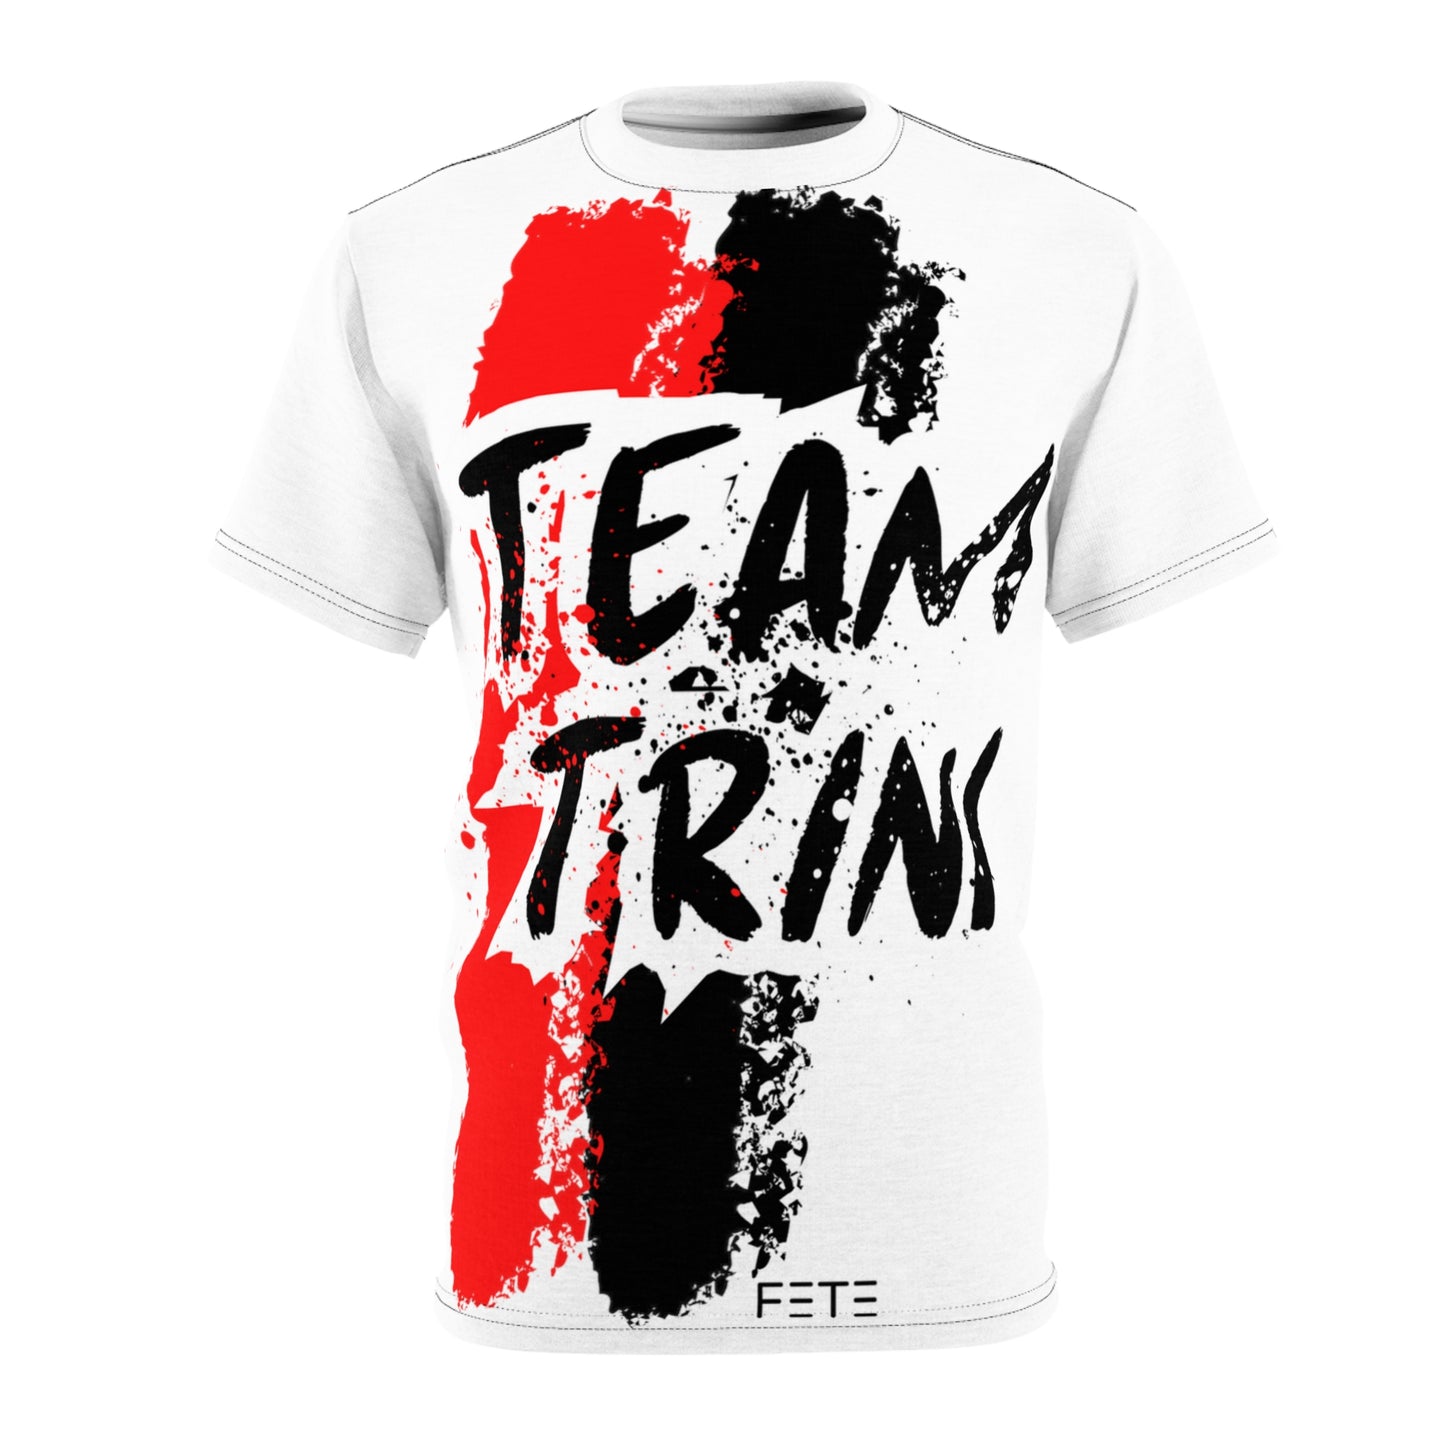 Team Trini Premium Lightweight Tee